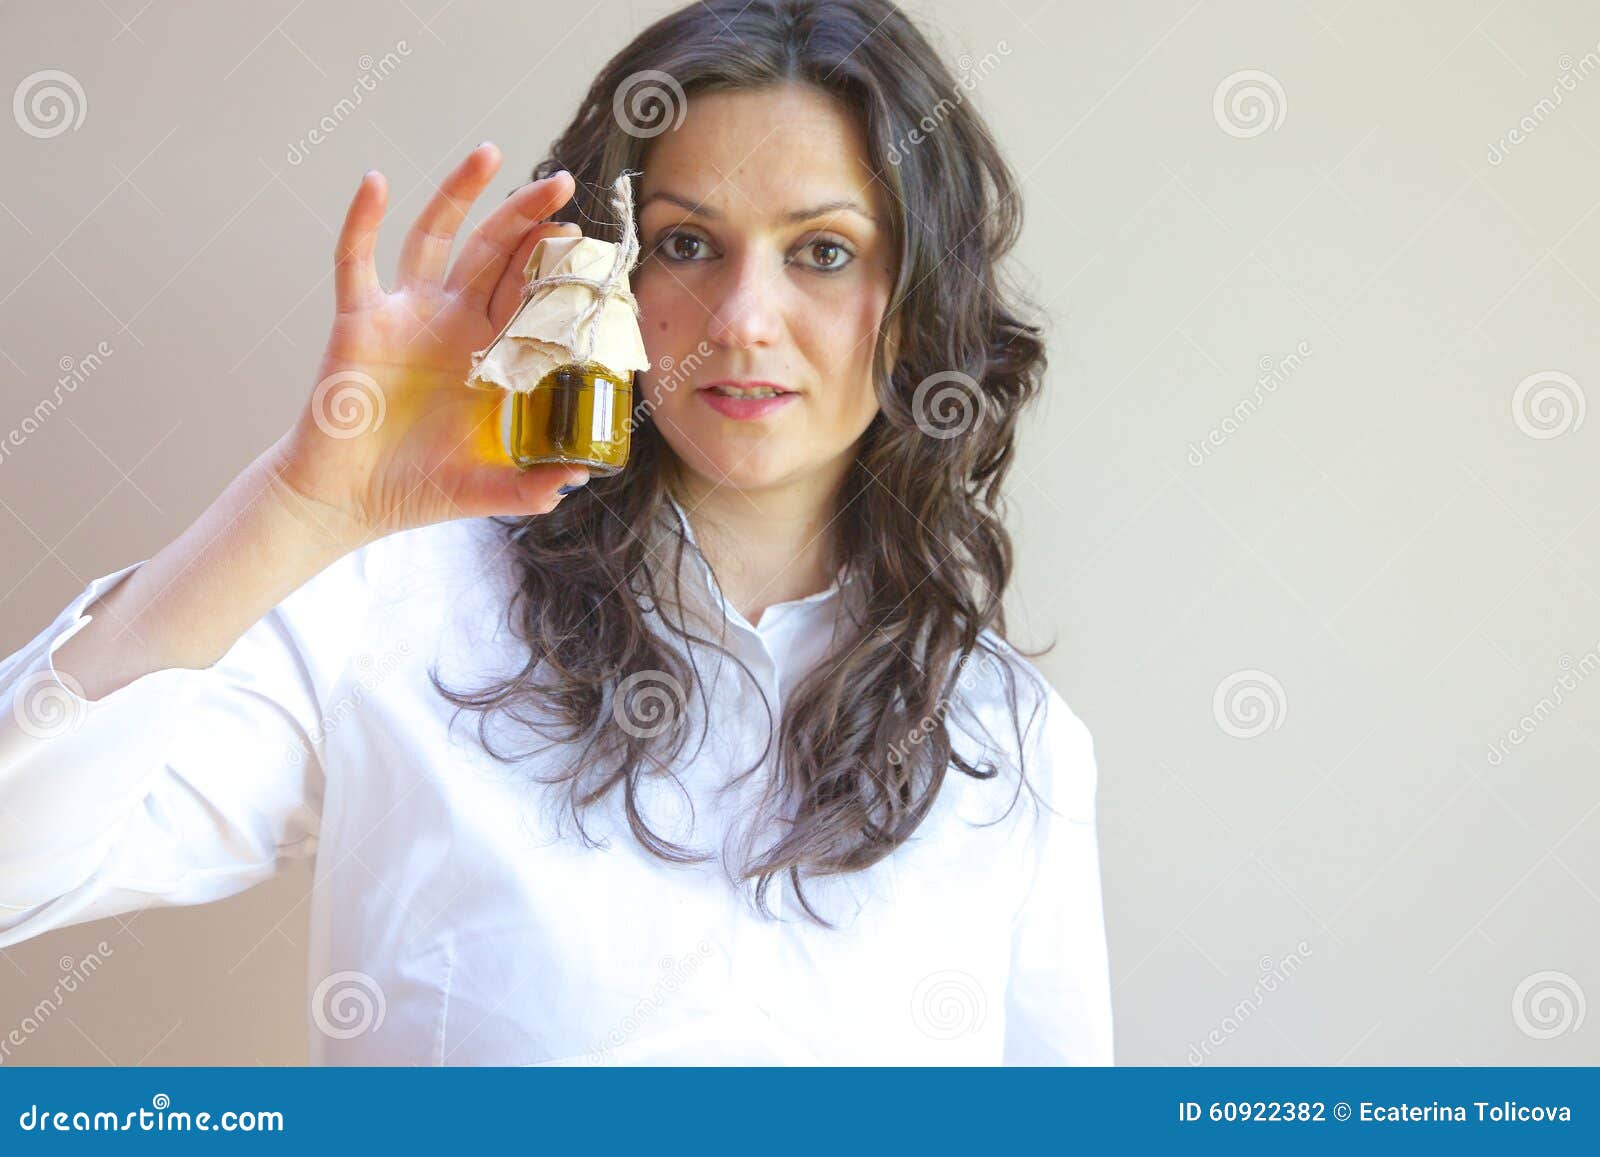 a glass of vegetal oil